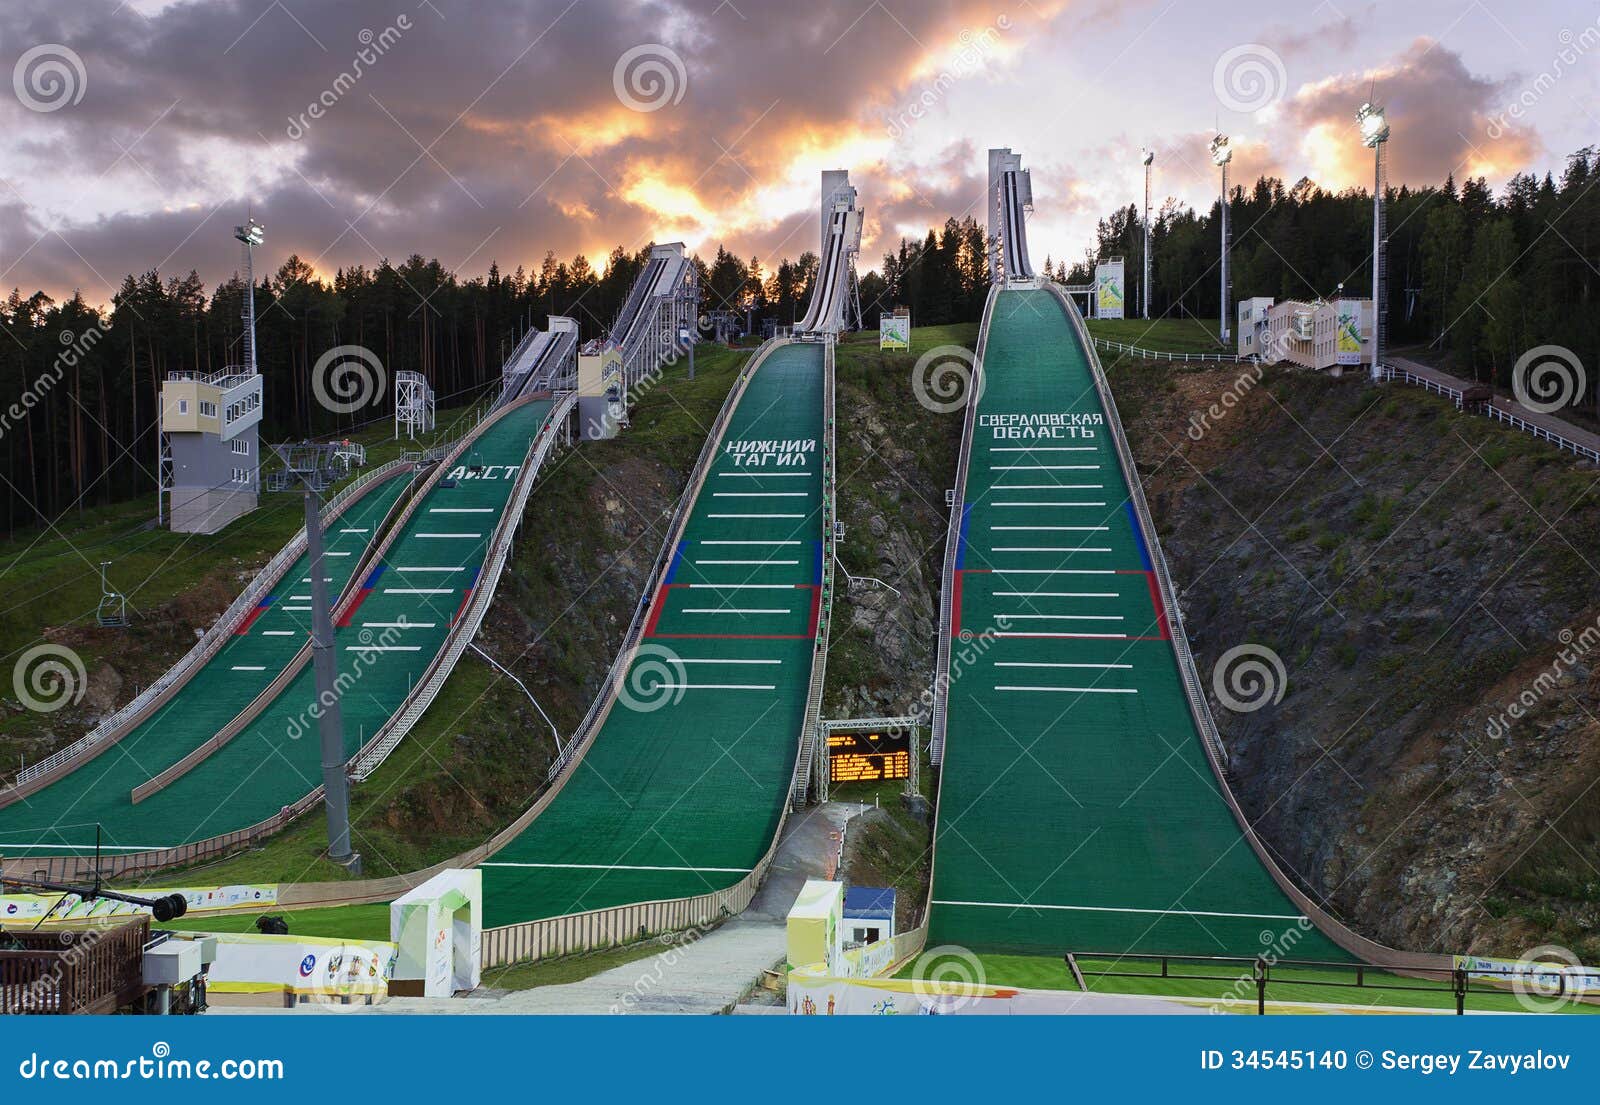 Ski Jumping Hill Stock Photo Image 34545140 with regard to ski jumping russia with regard to Property